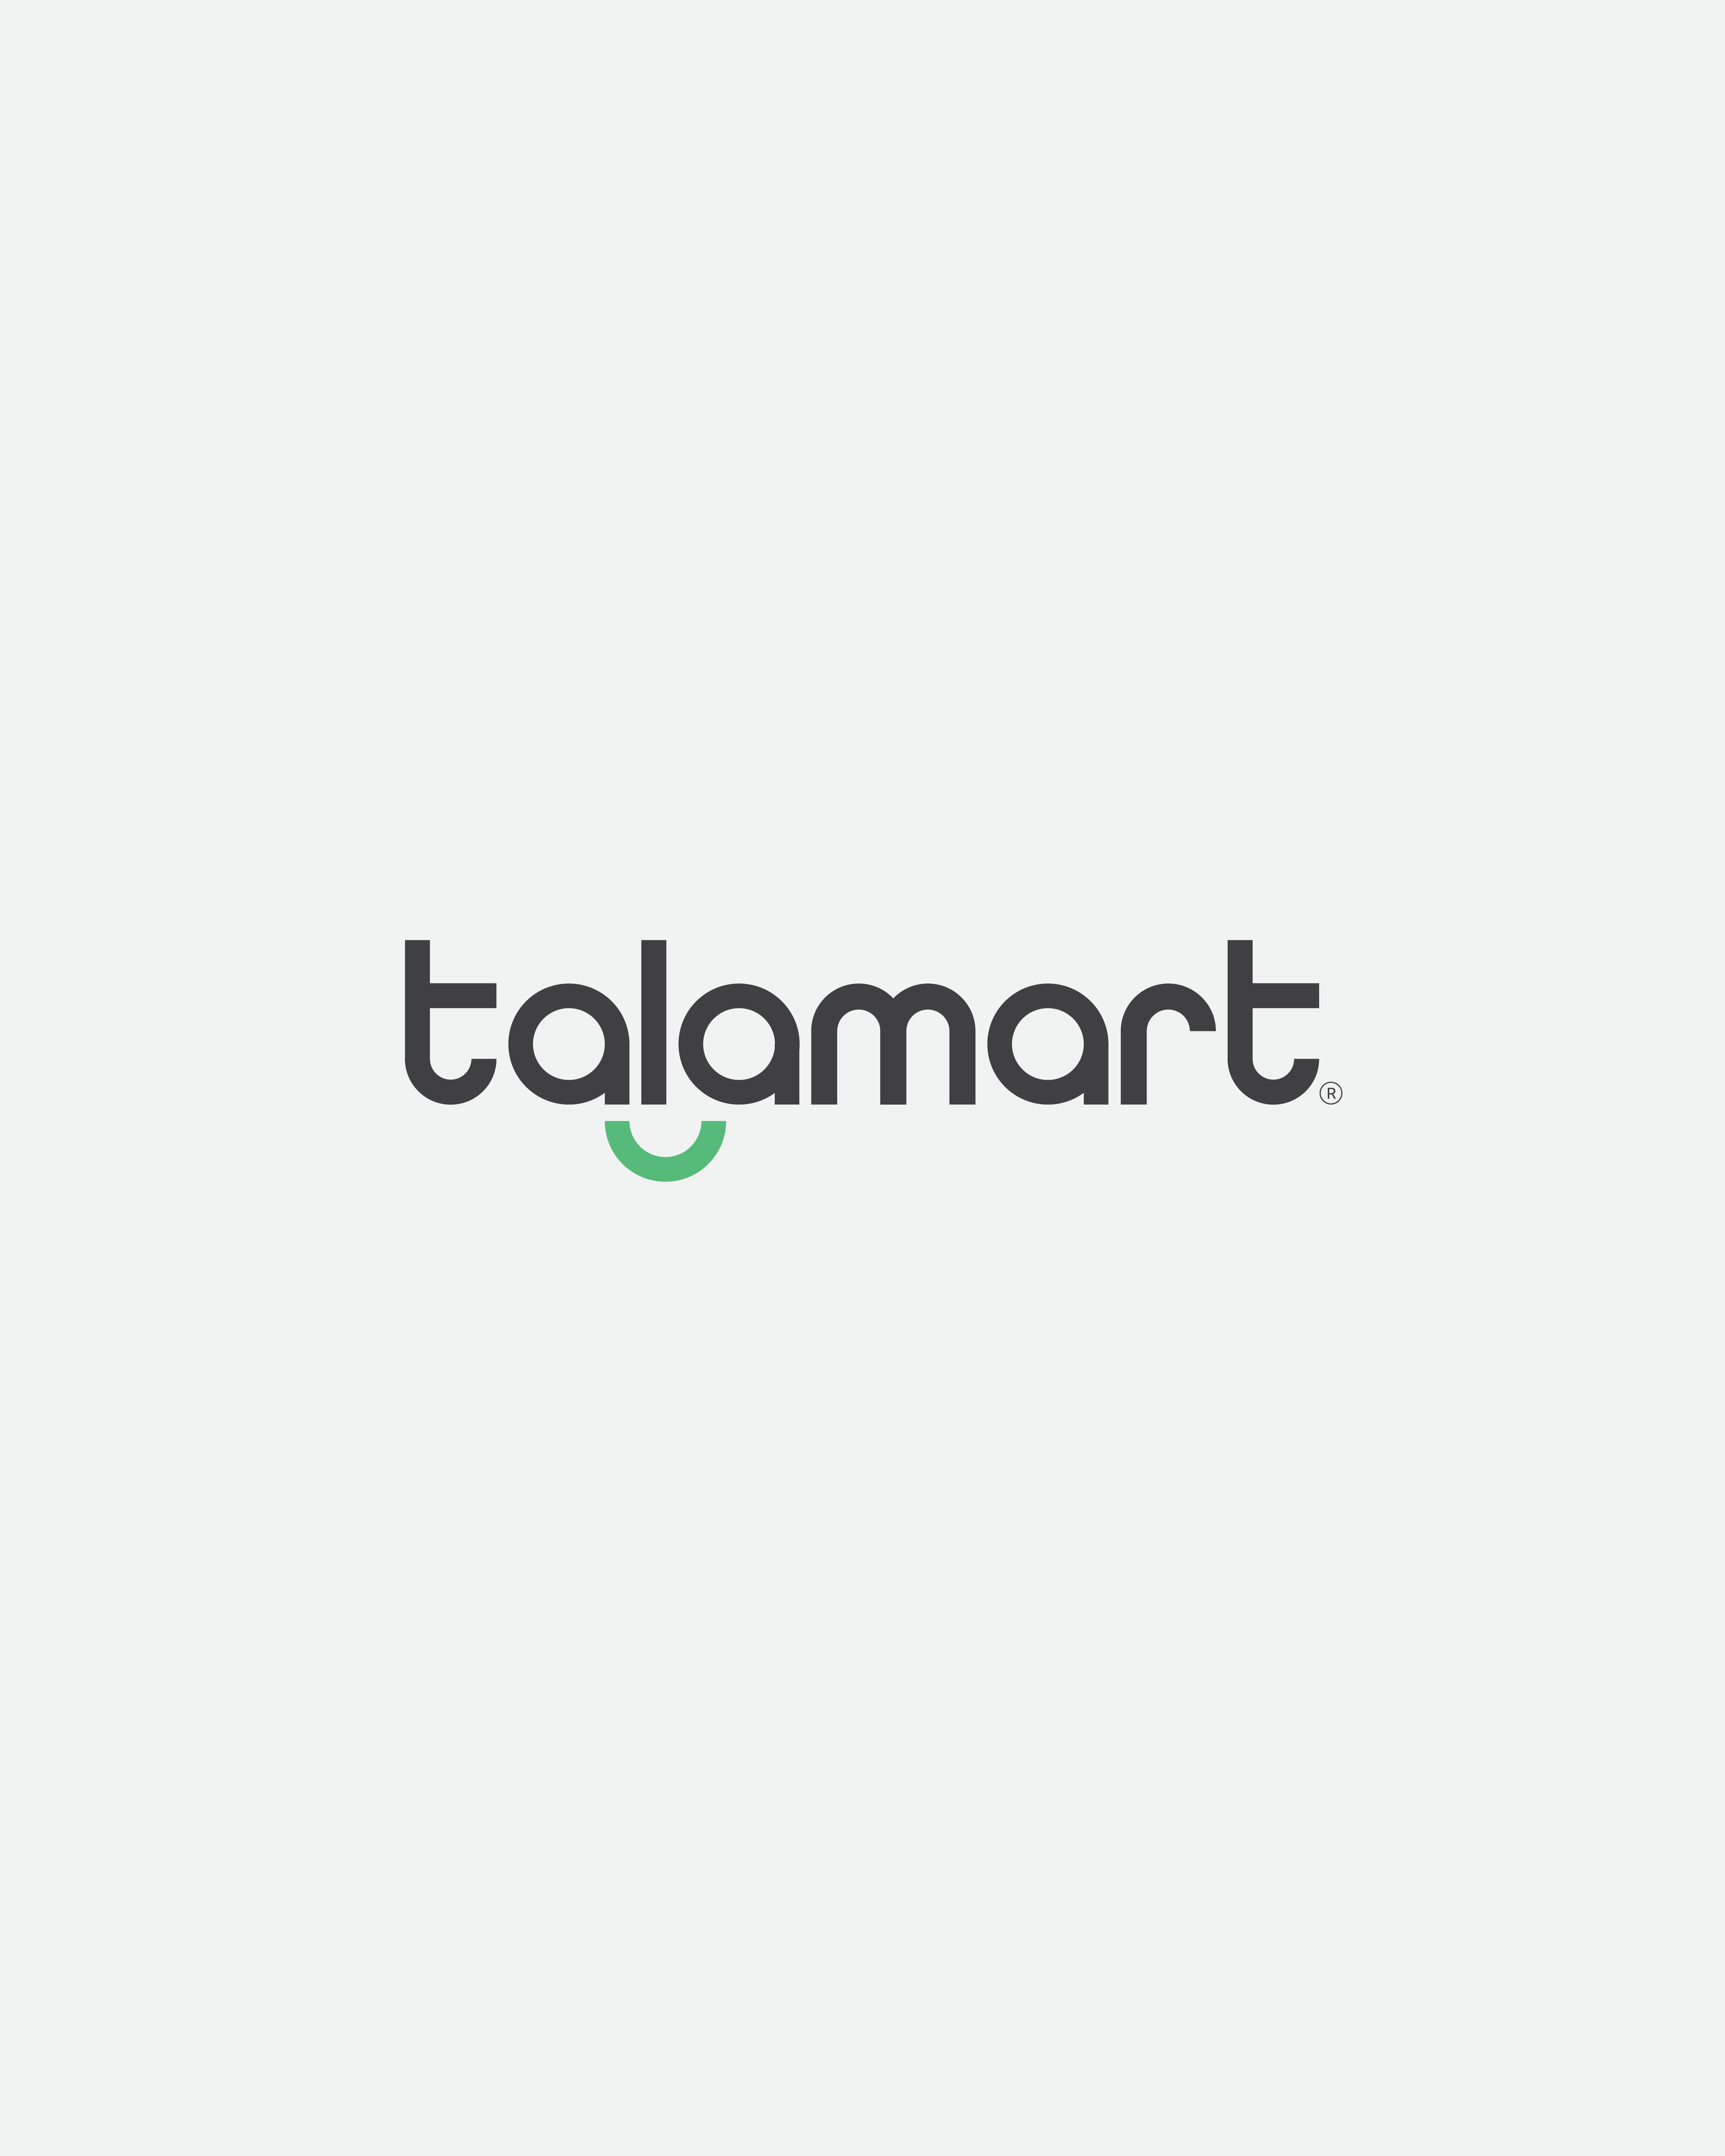 Talamart Branding